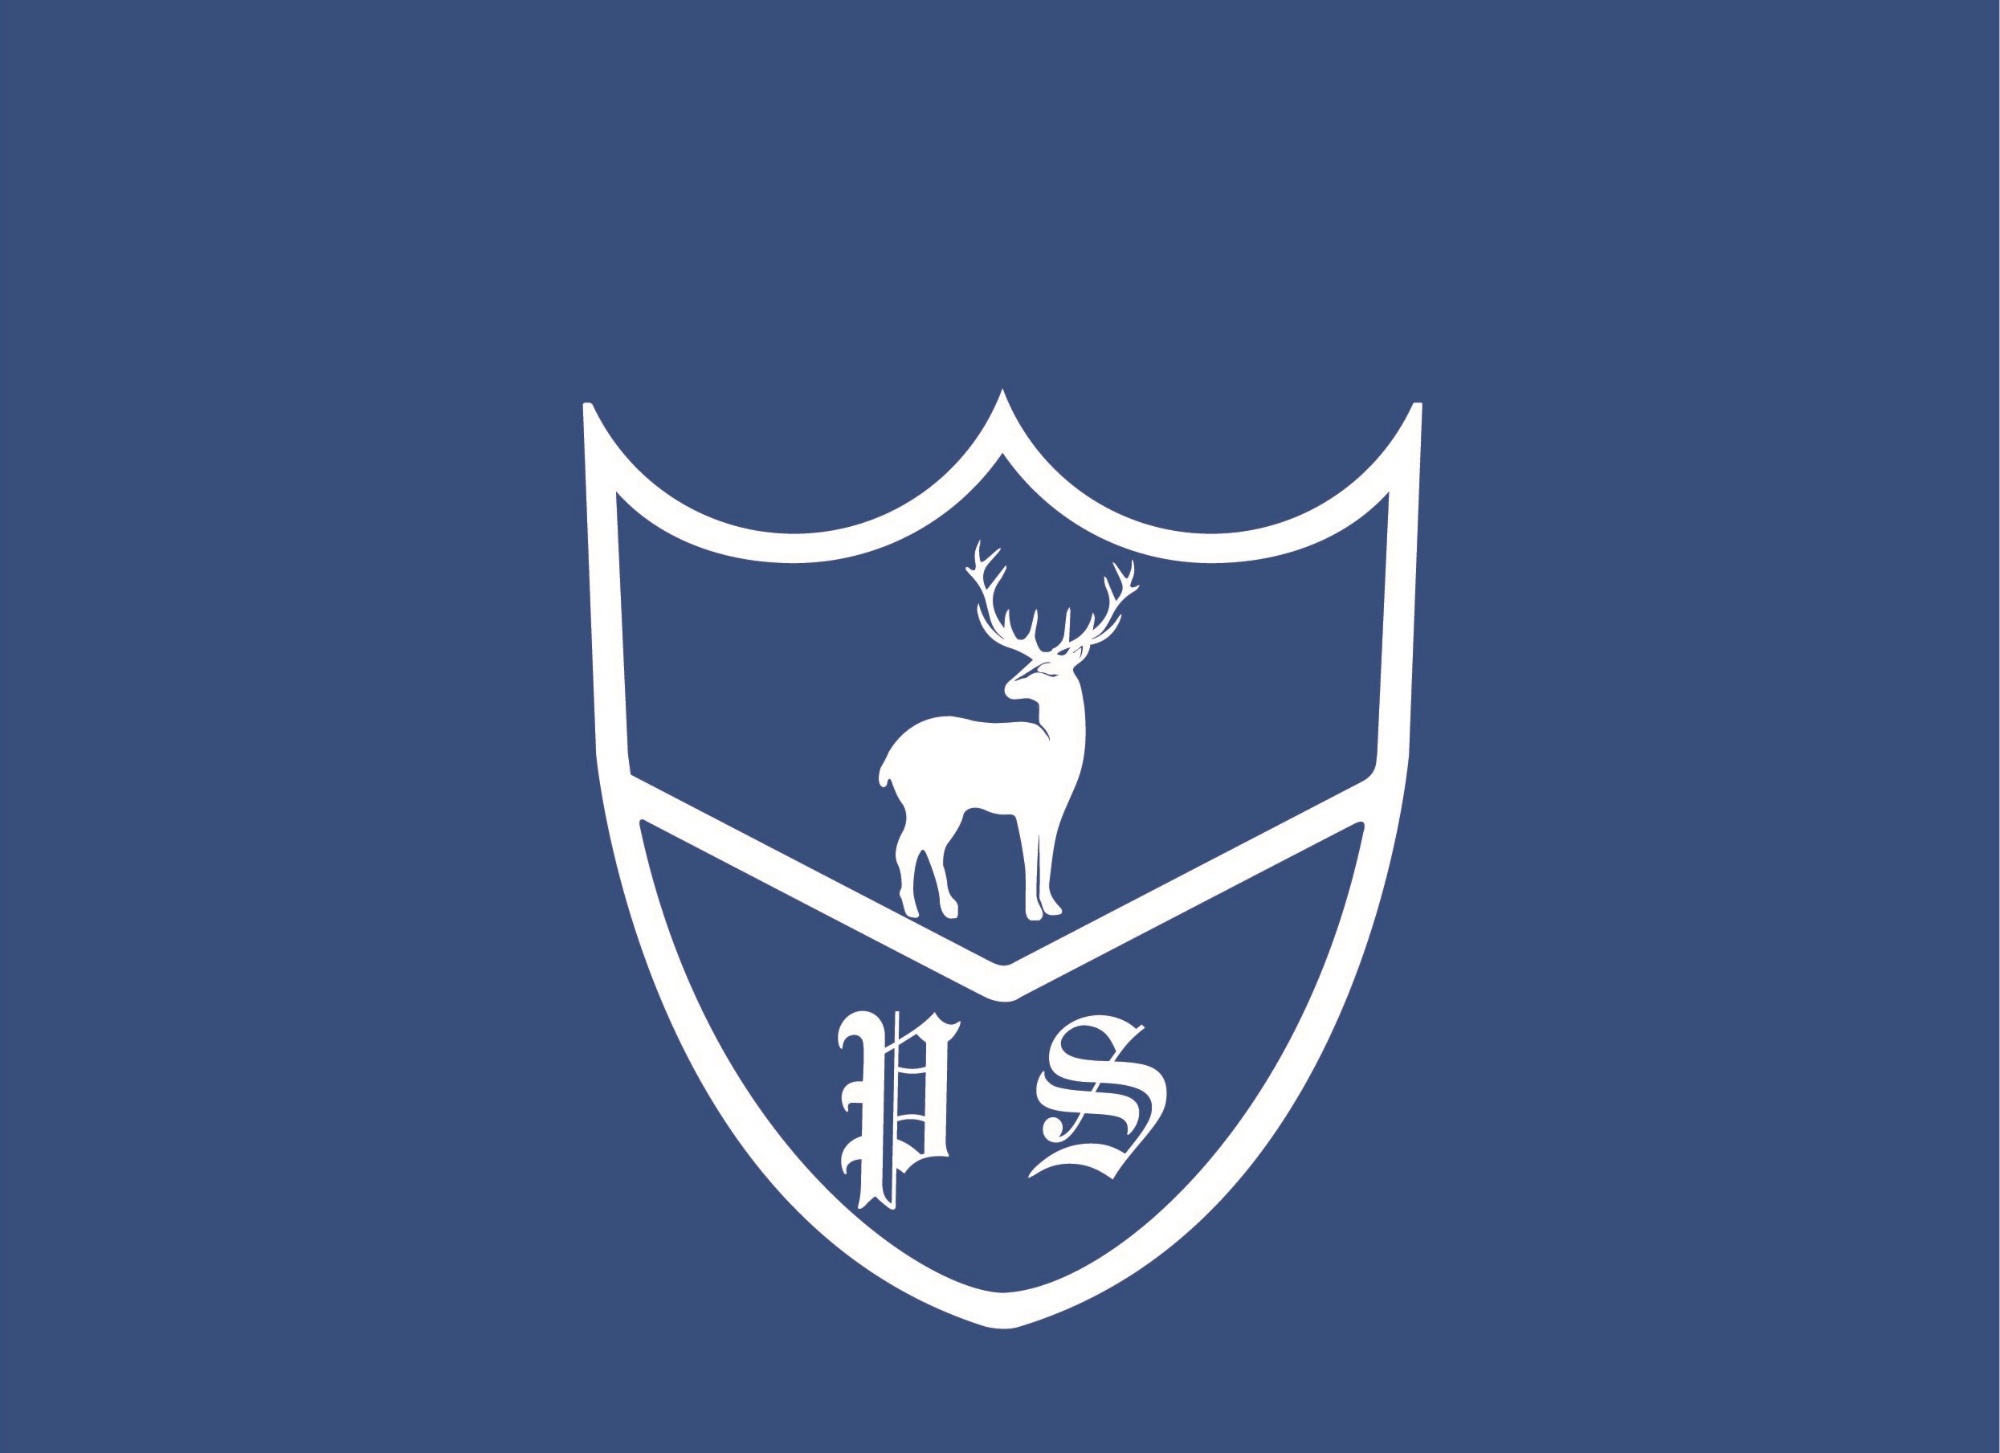 Park School logo